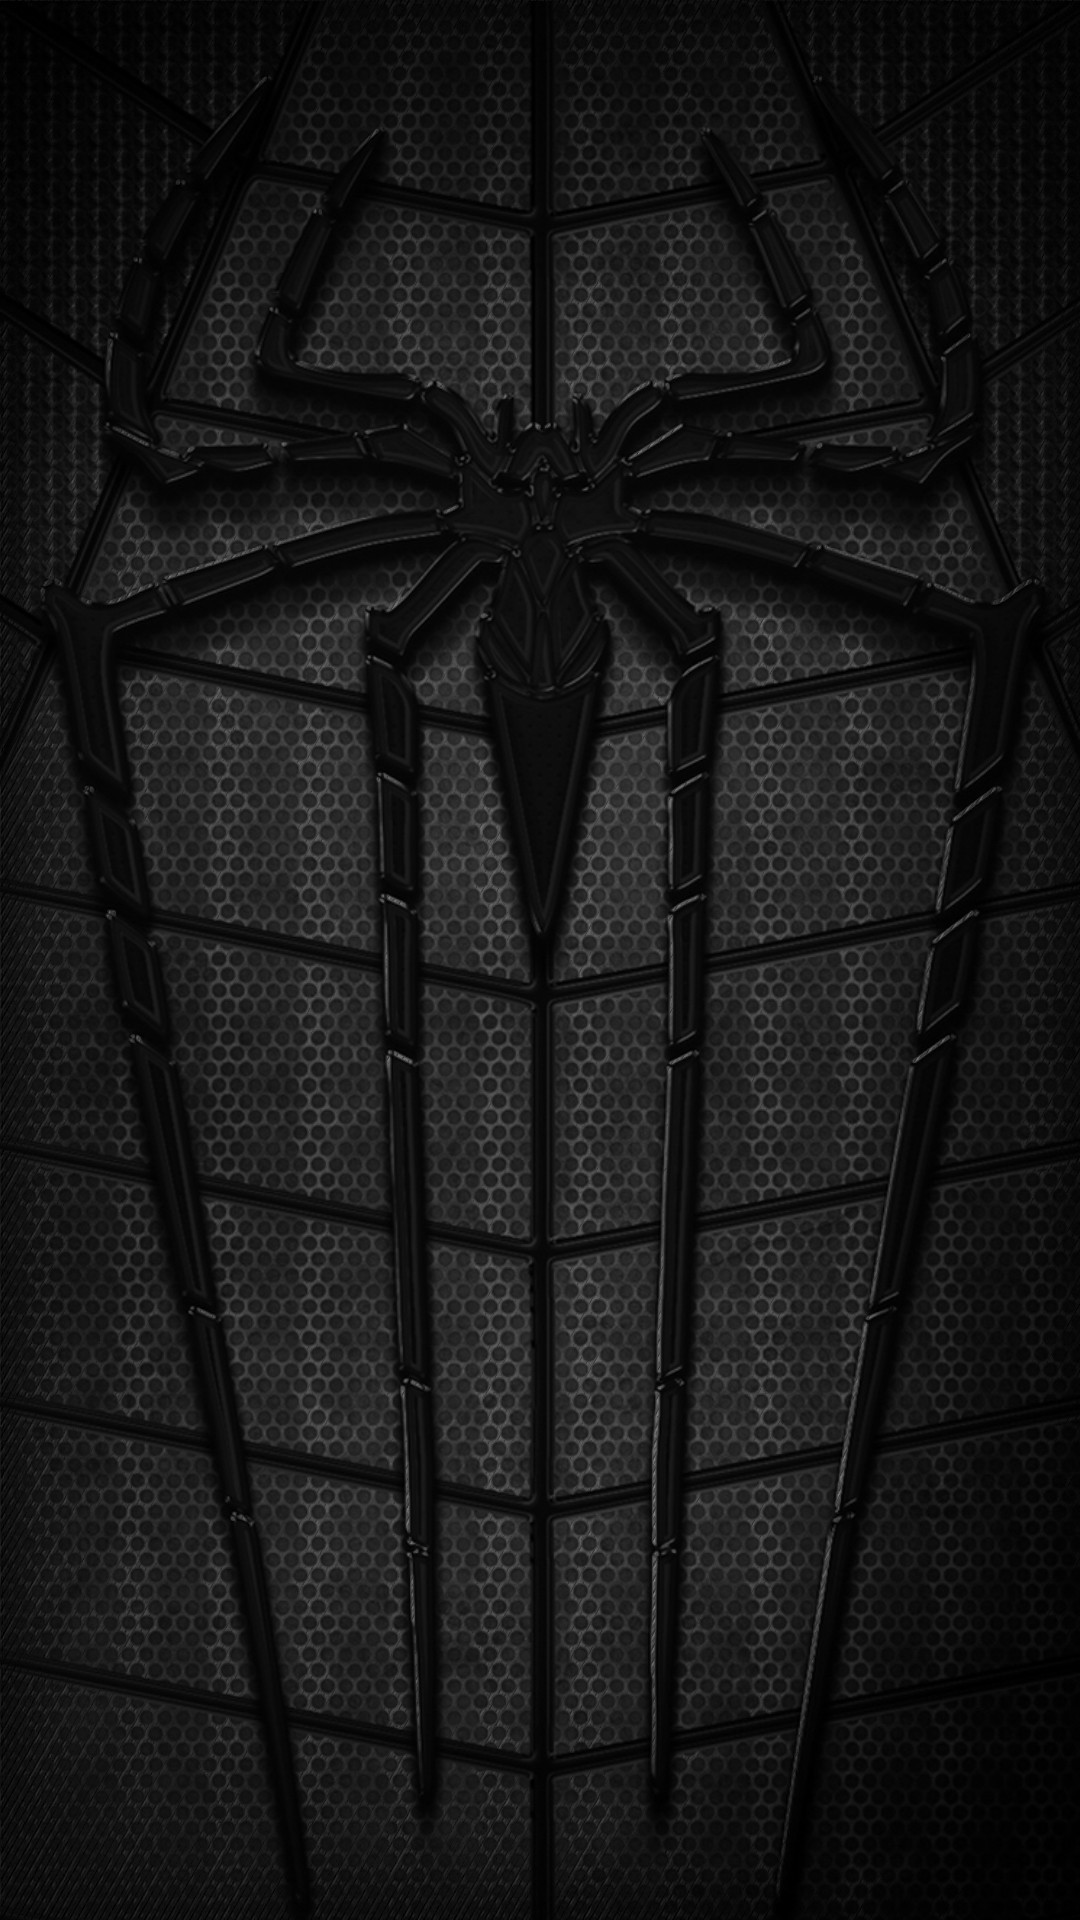 1080x1920 720x1280 14747 amazing spiderman phone wallpaper